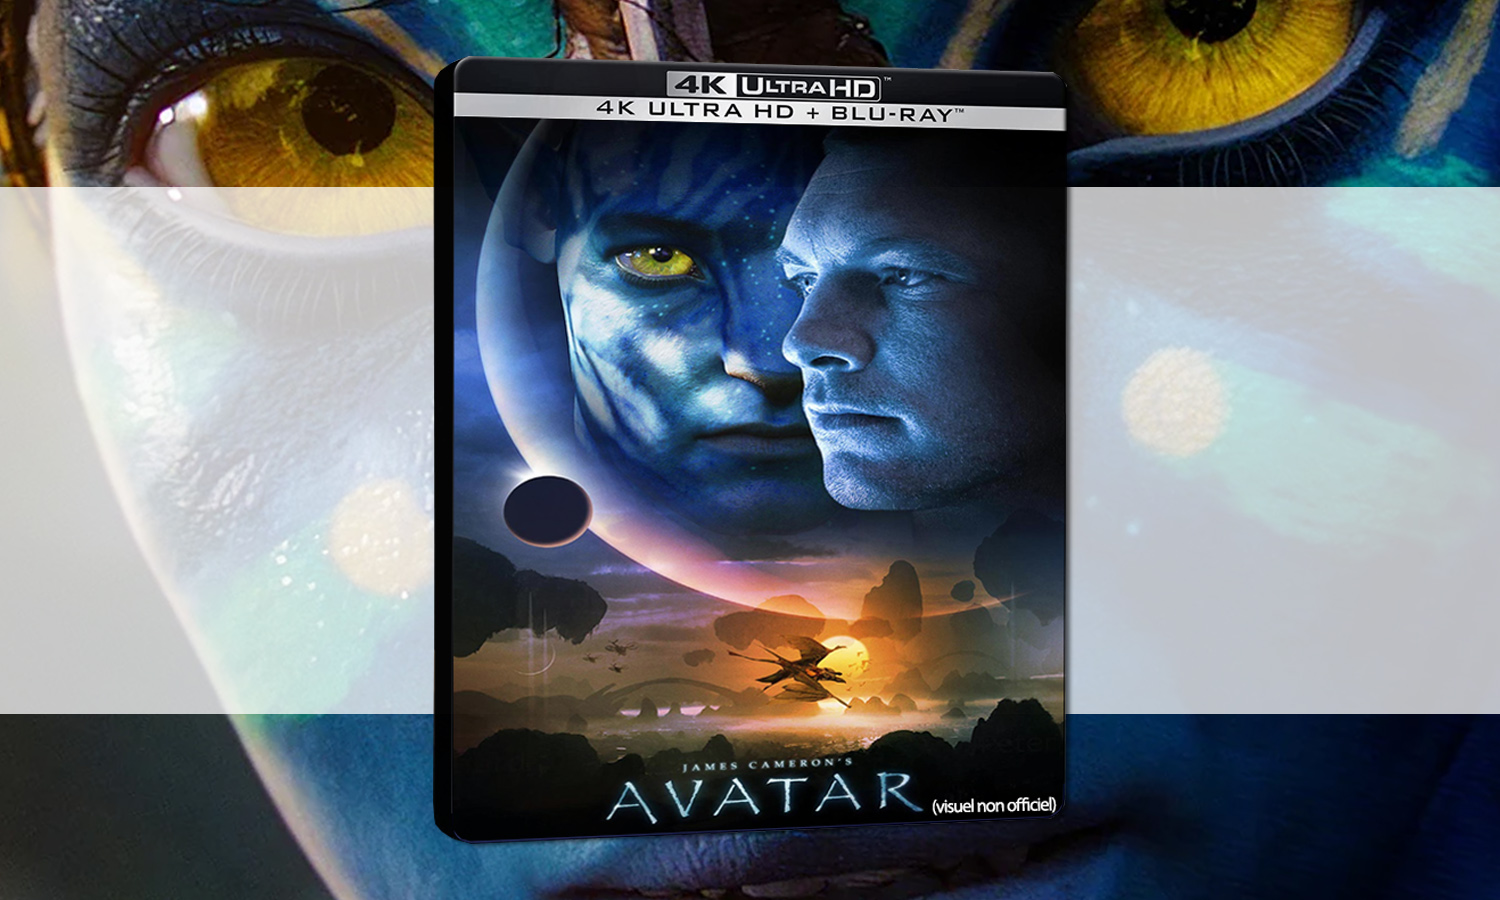 Avatar The Way of Water Walmart Exclusive 4K Ultra HD  BluRay   Digital Copy  Walmartcom